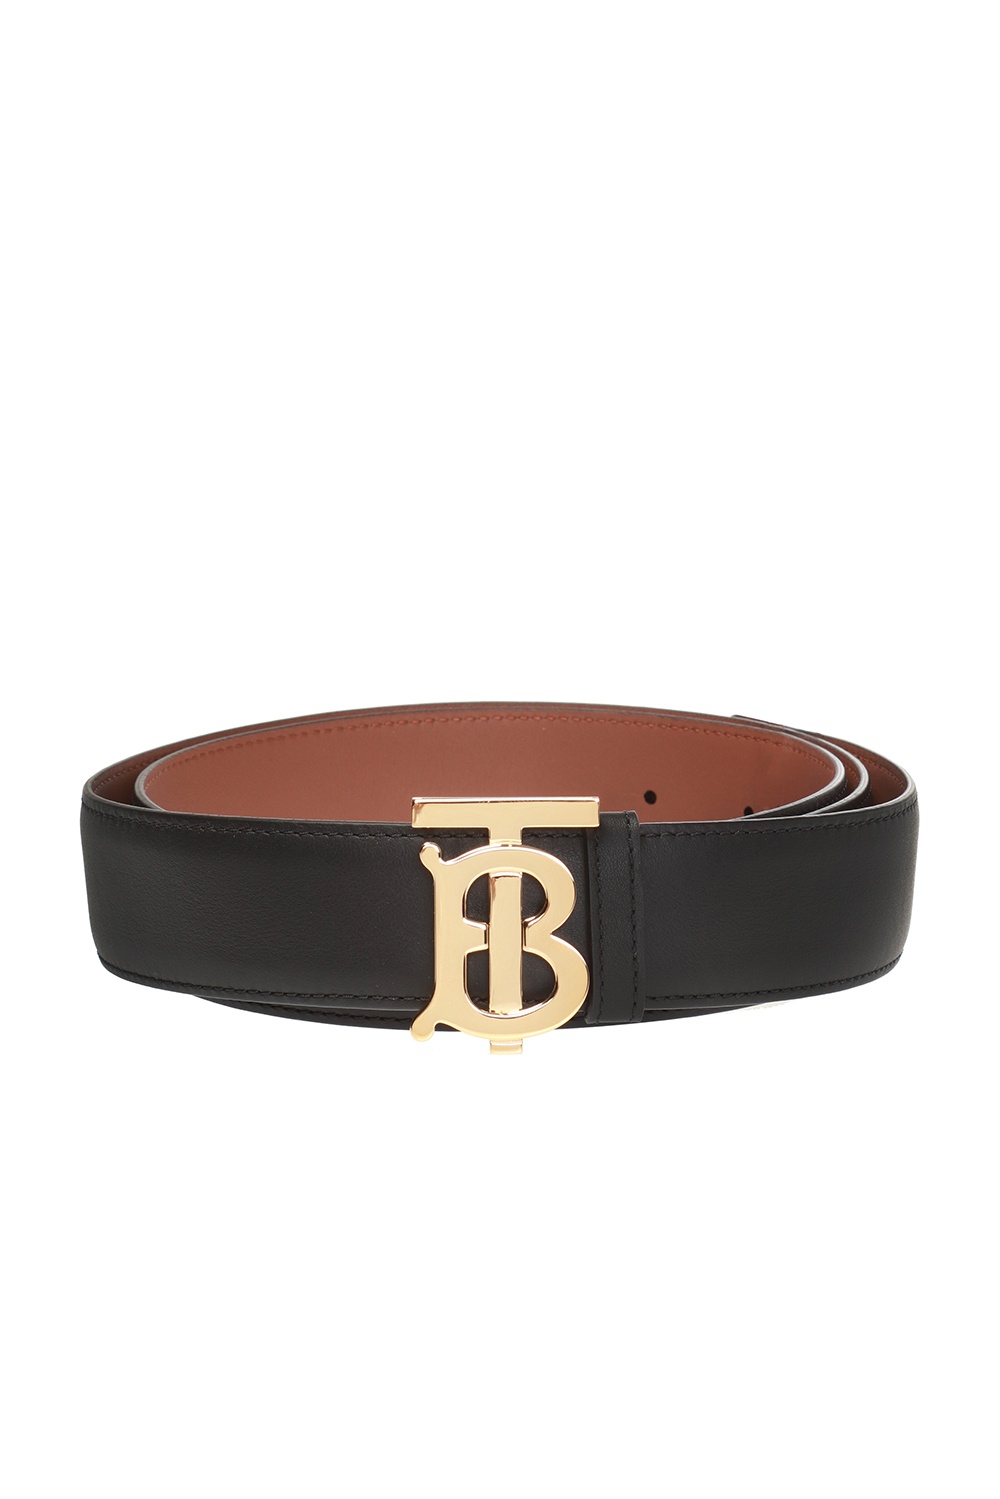 Burberry Belt with decorative buckle, Women's Accessories